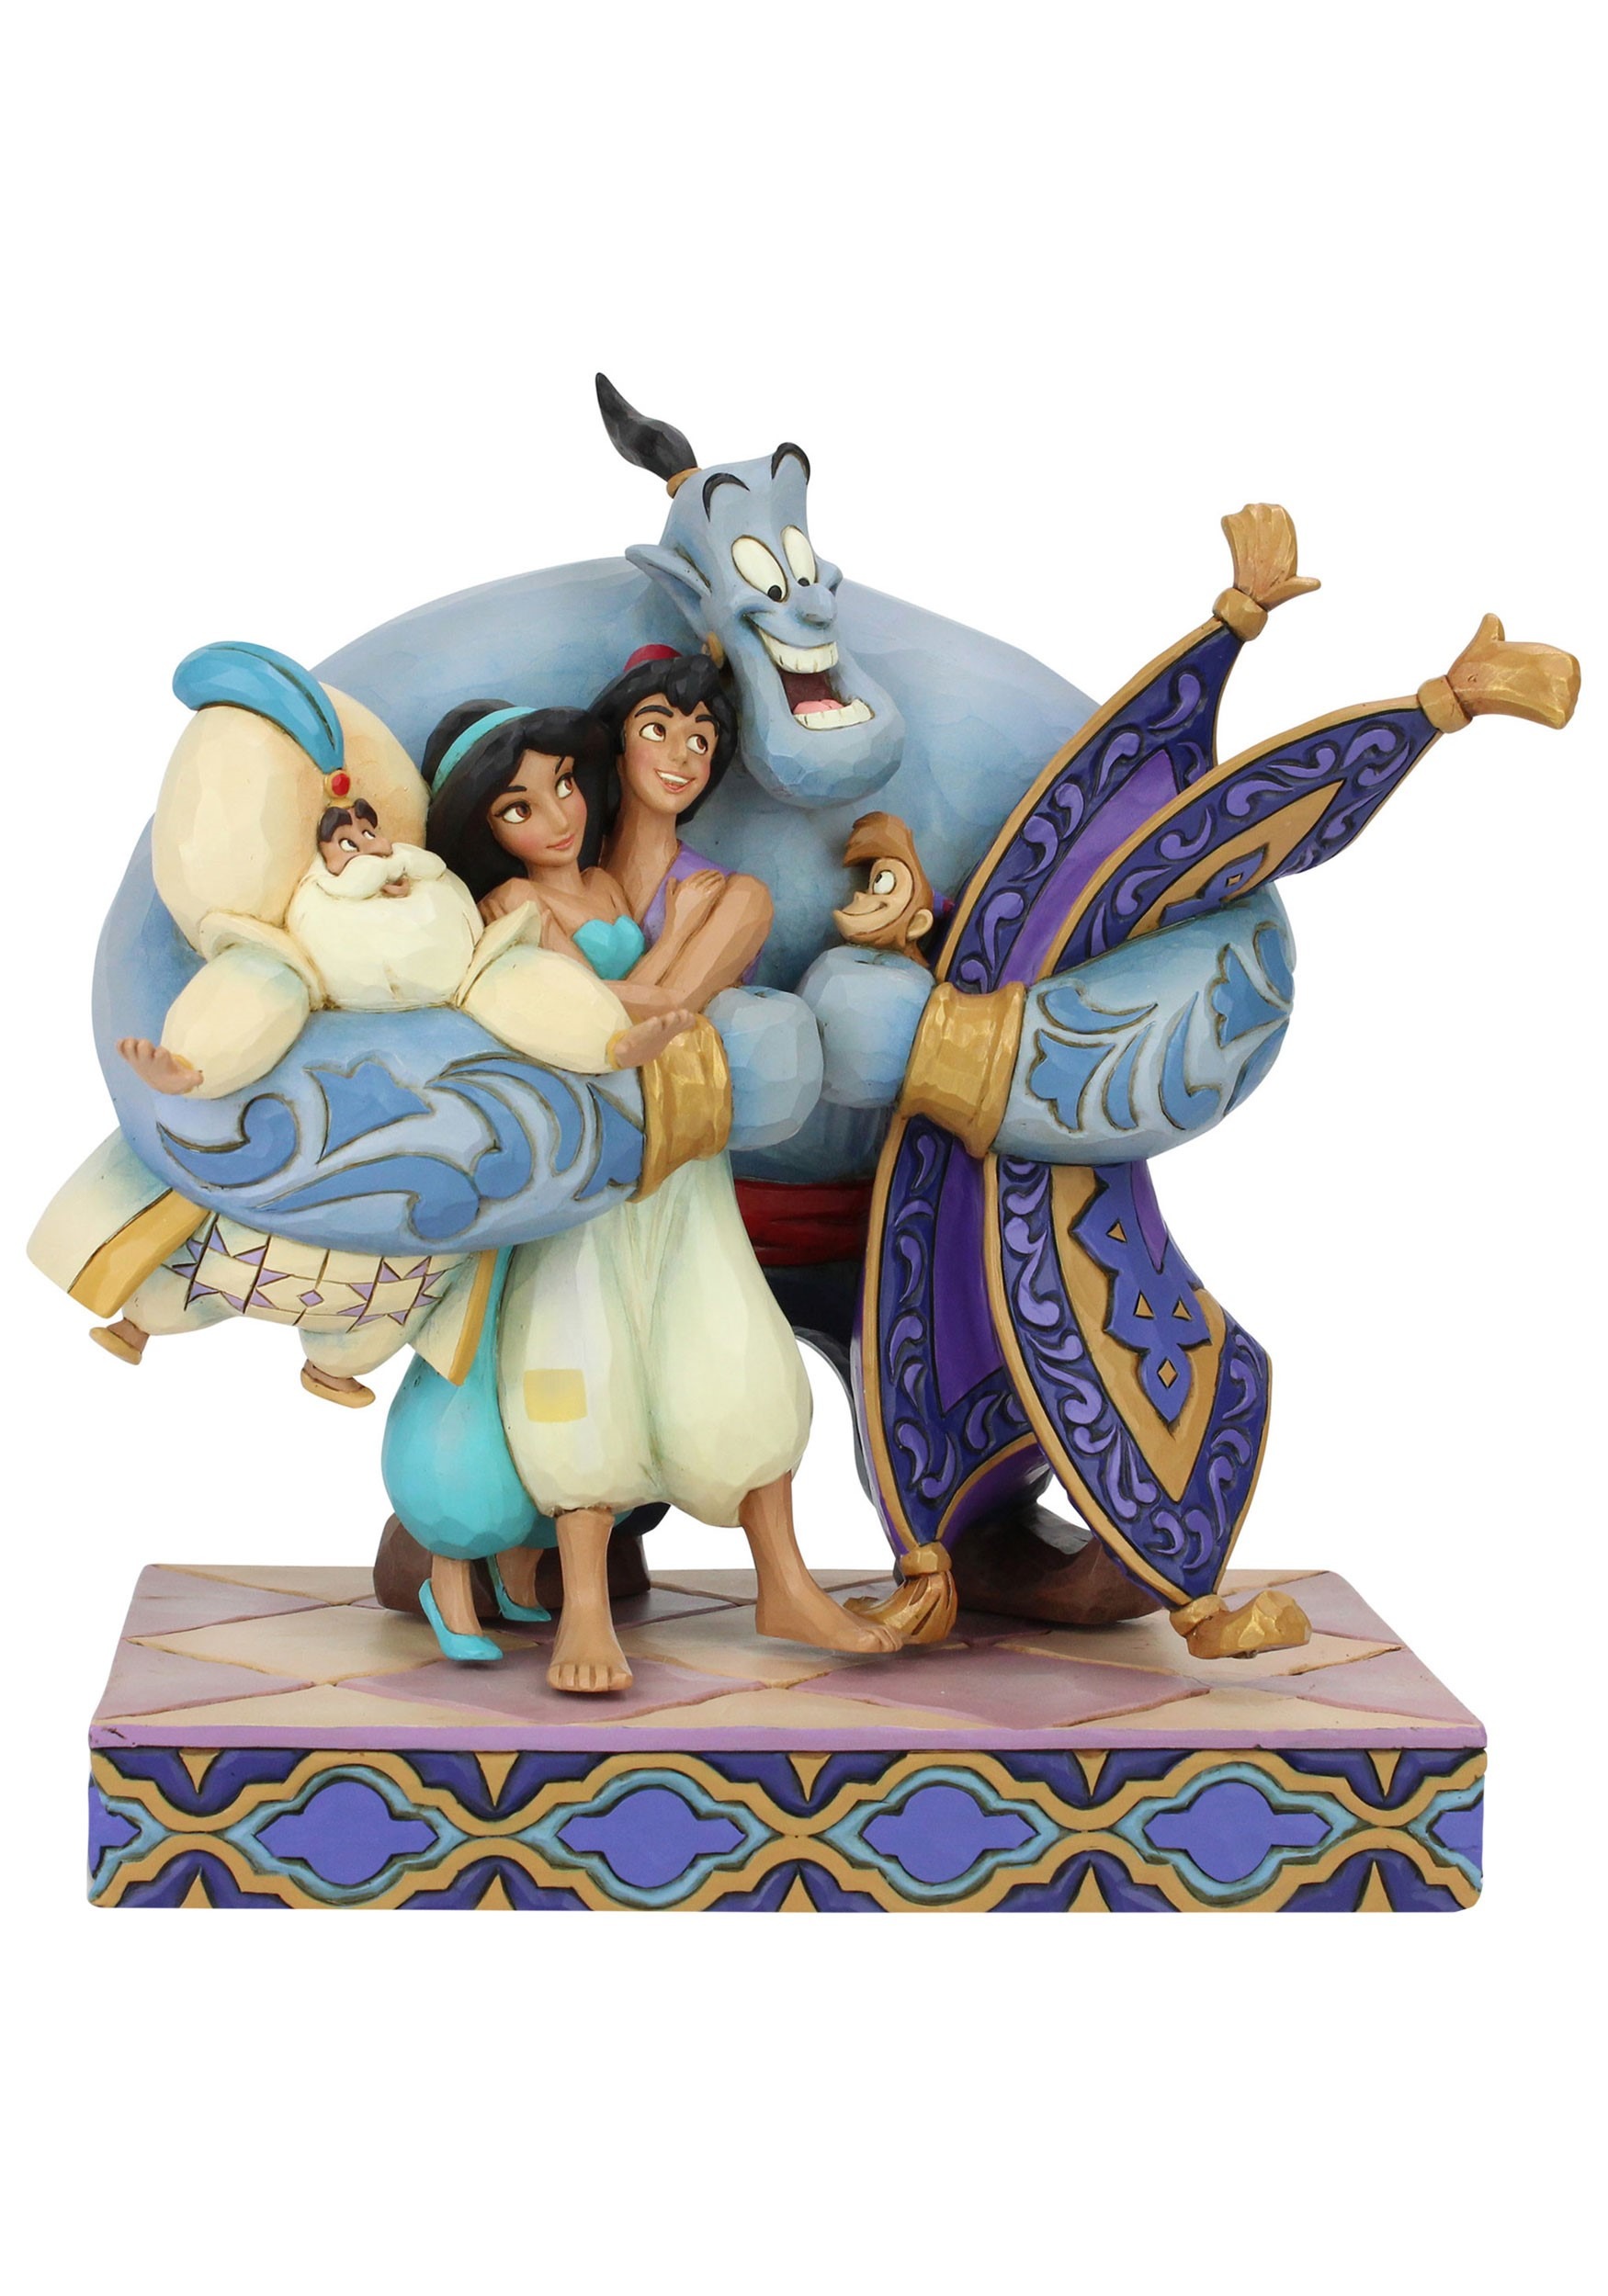 Aladdin Group Hug Statue by Jim Shore